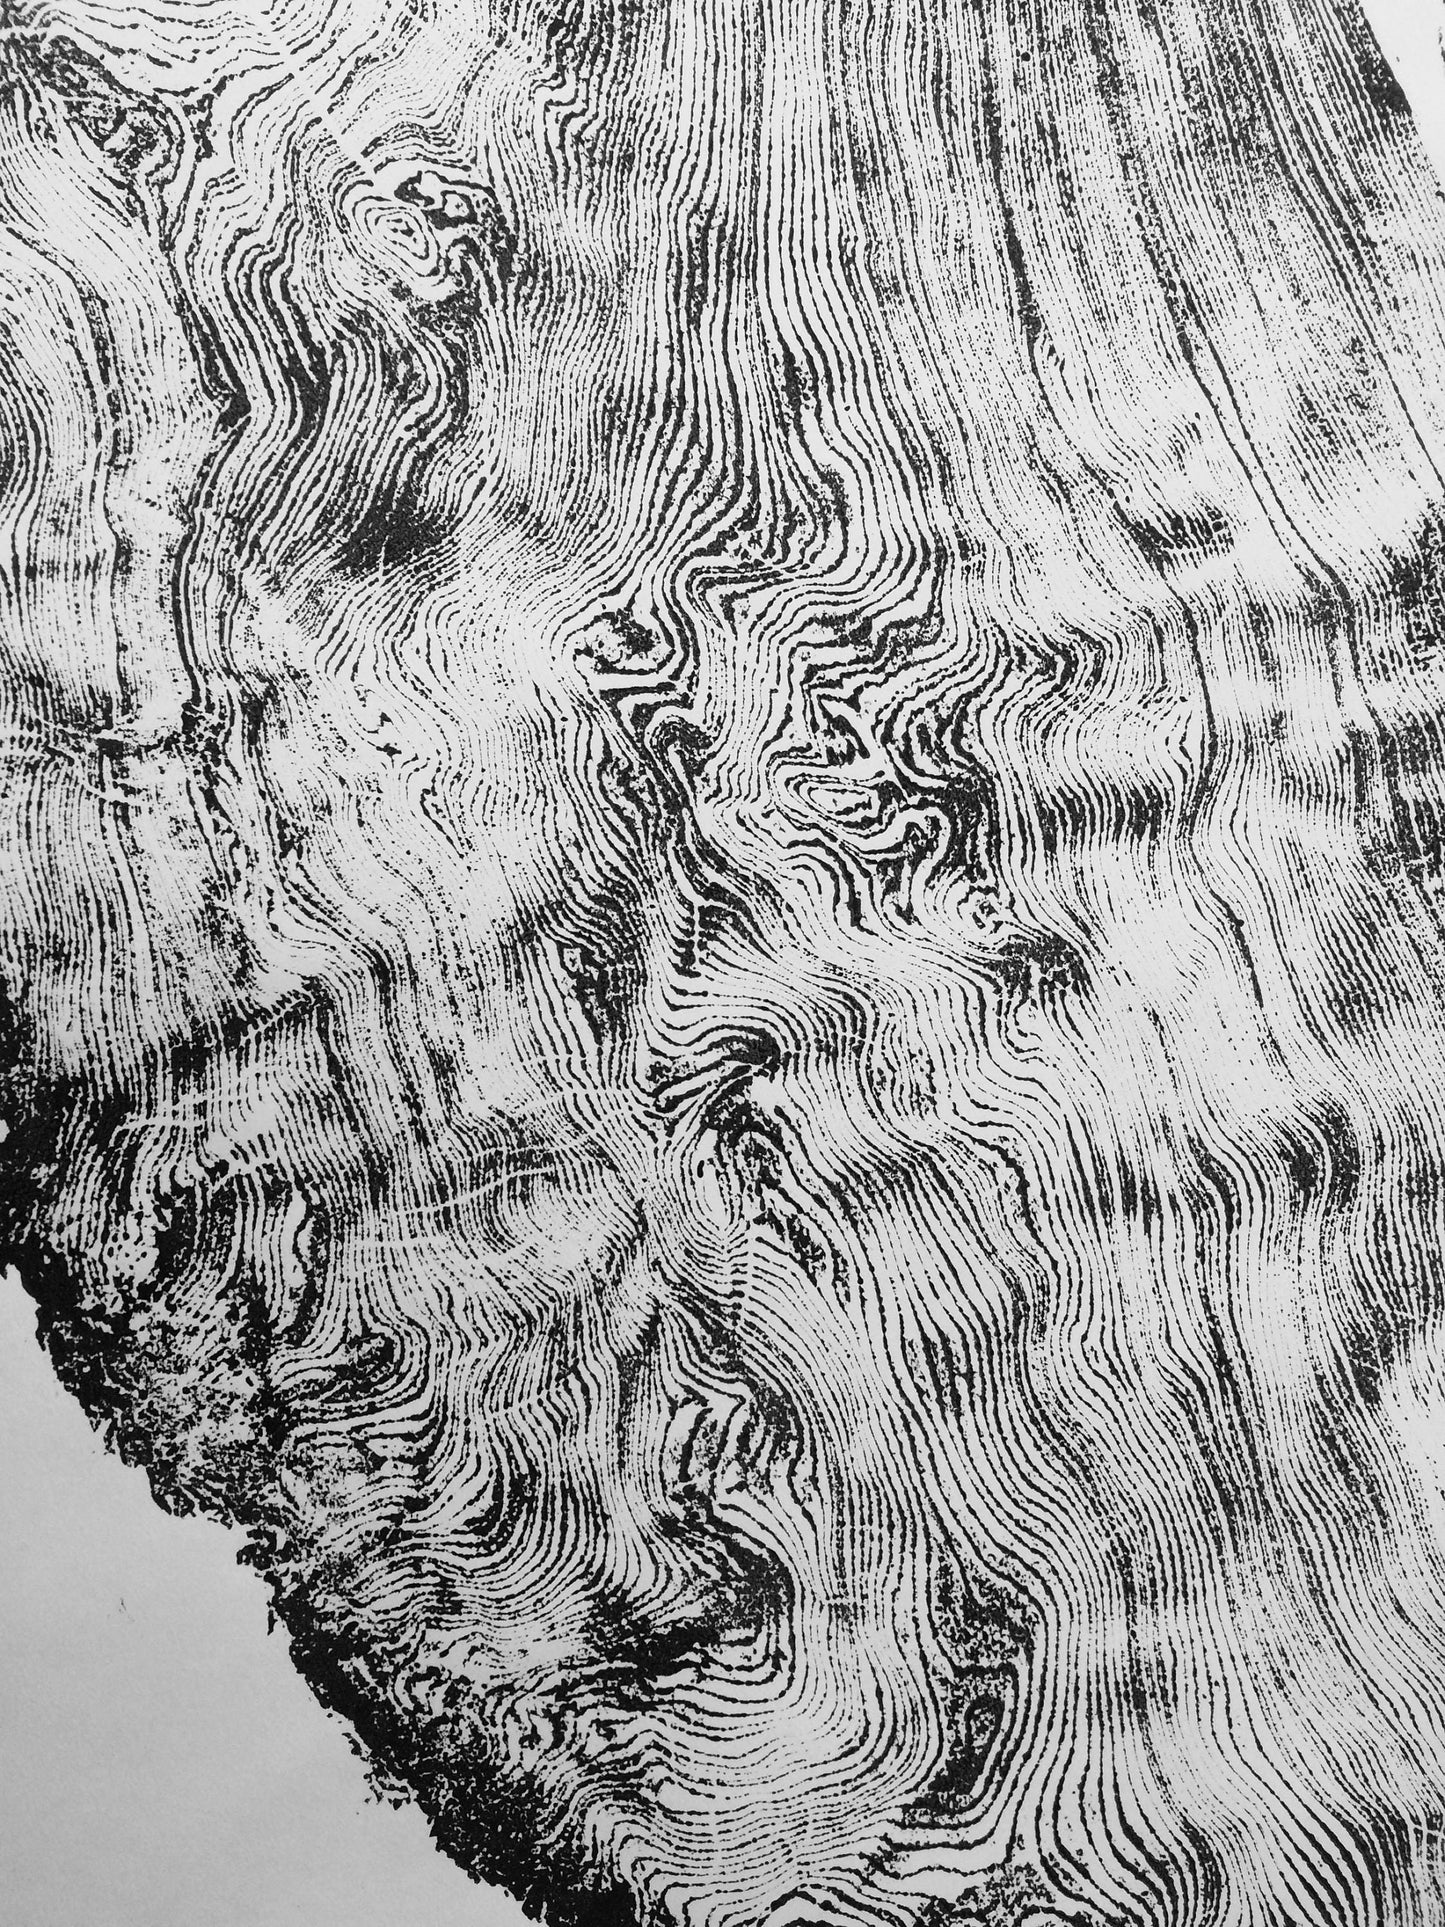 Giant Redwood, Orick Area California - 3x6 feet print